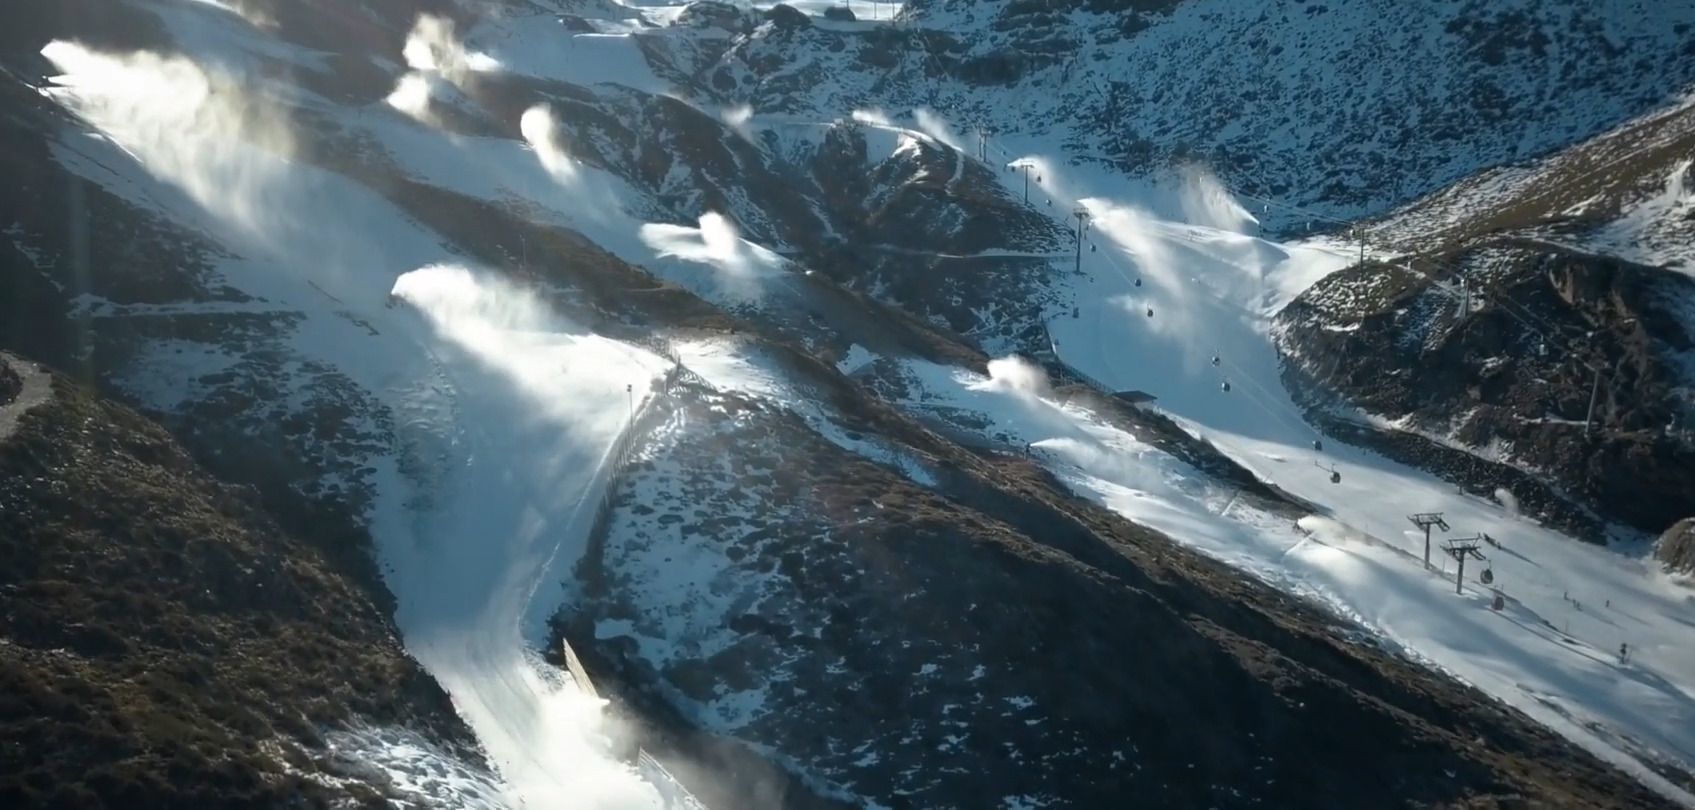 Sierra Nevada nieve artificial